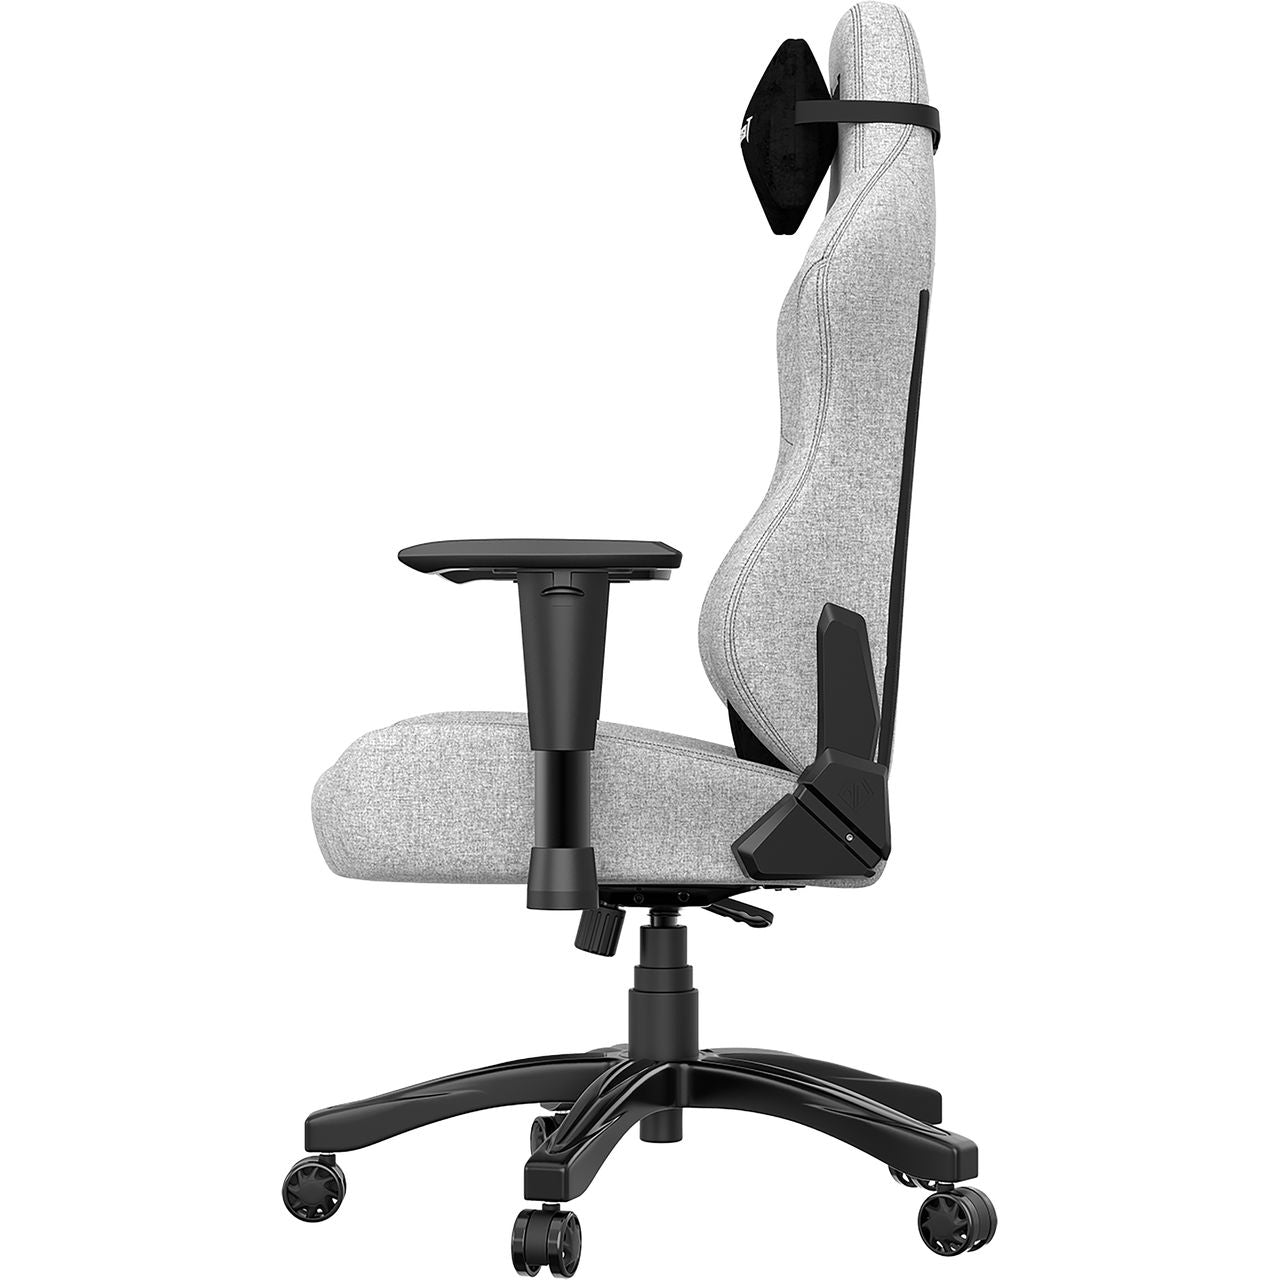 Anda Seat Phantom 3 Gaming Chair - Grey (AD18Y-06-G-F) - Refurbished Pristine